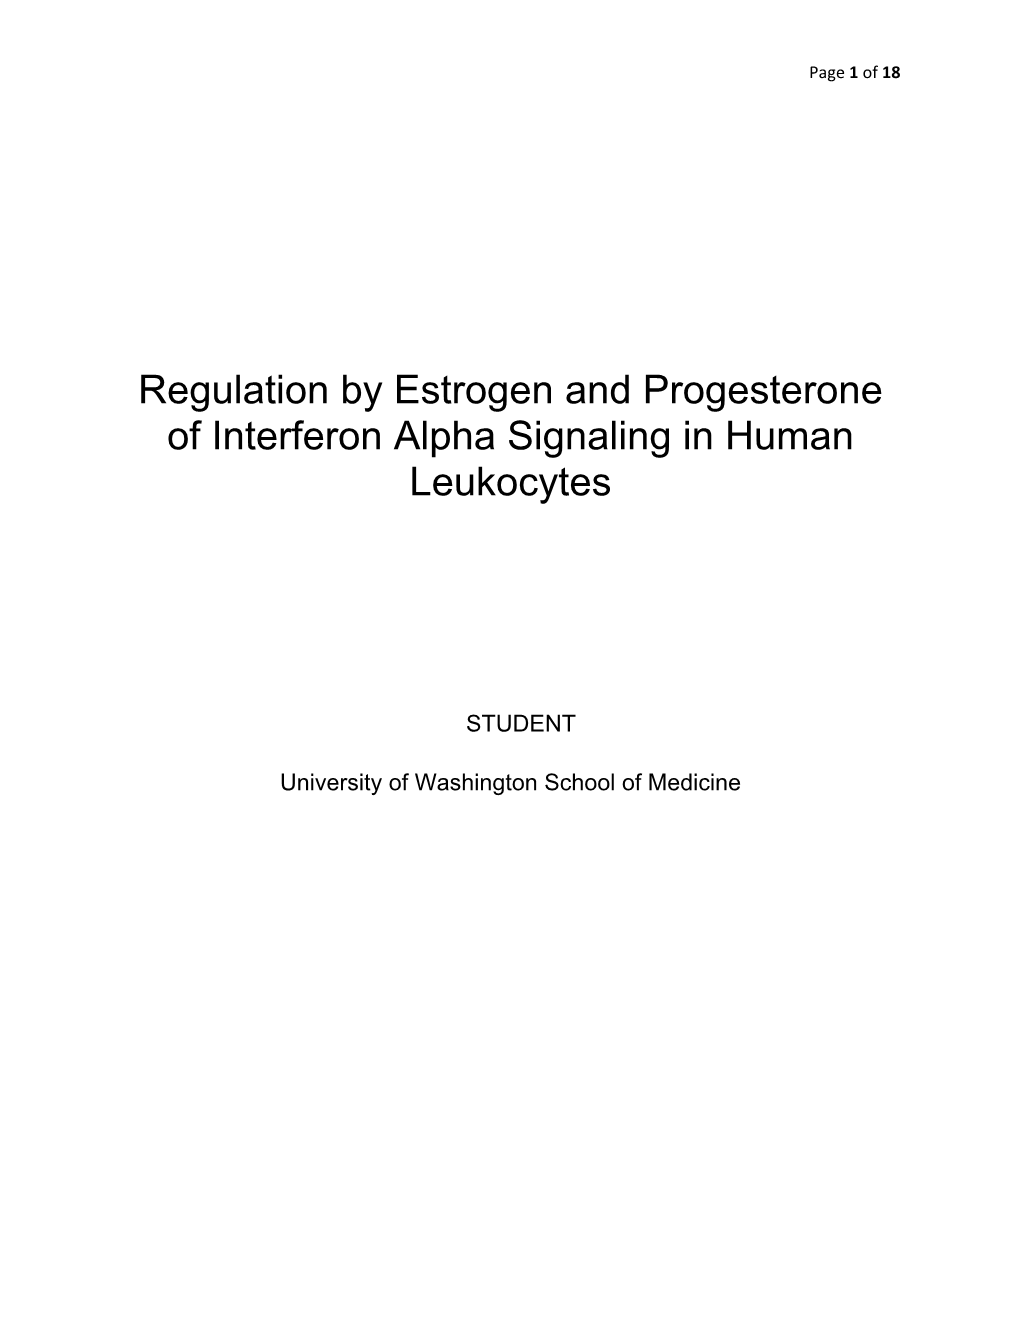 Regulation by Estrogen and Progesterone of Interferon Alpha Signaling in Human Leukocytes